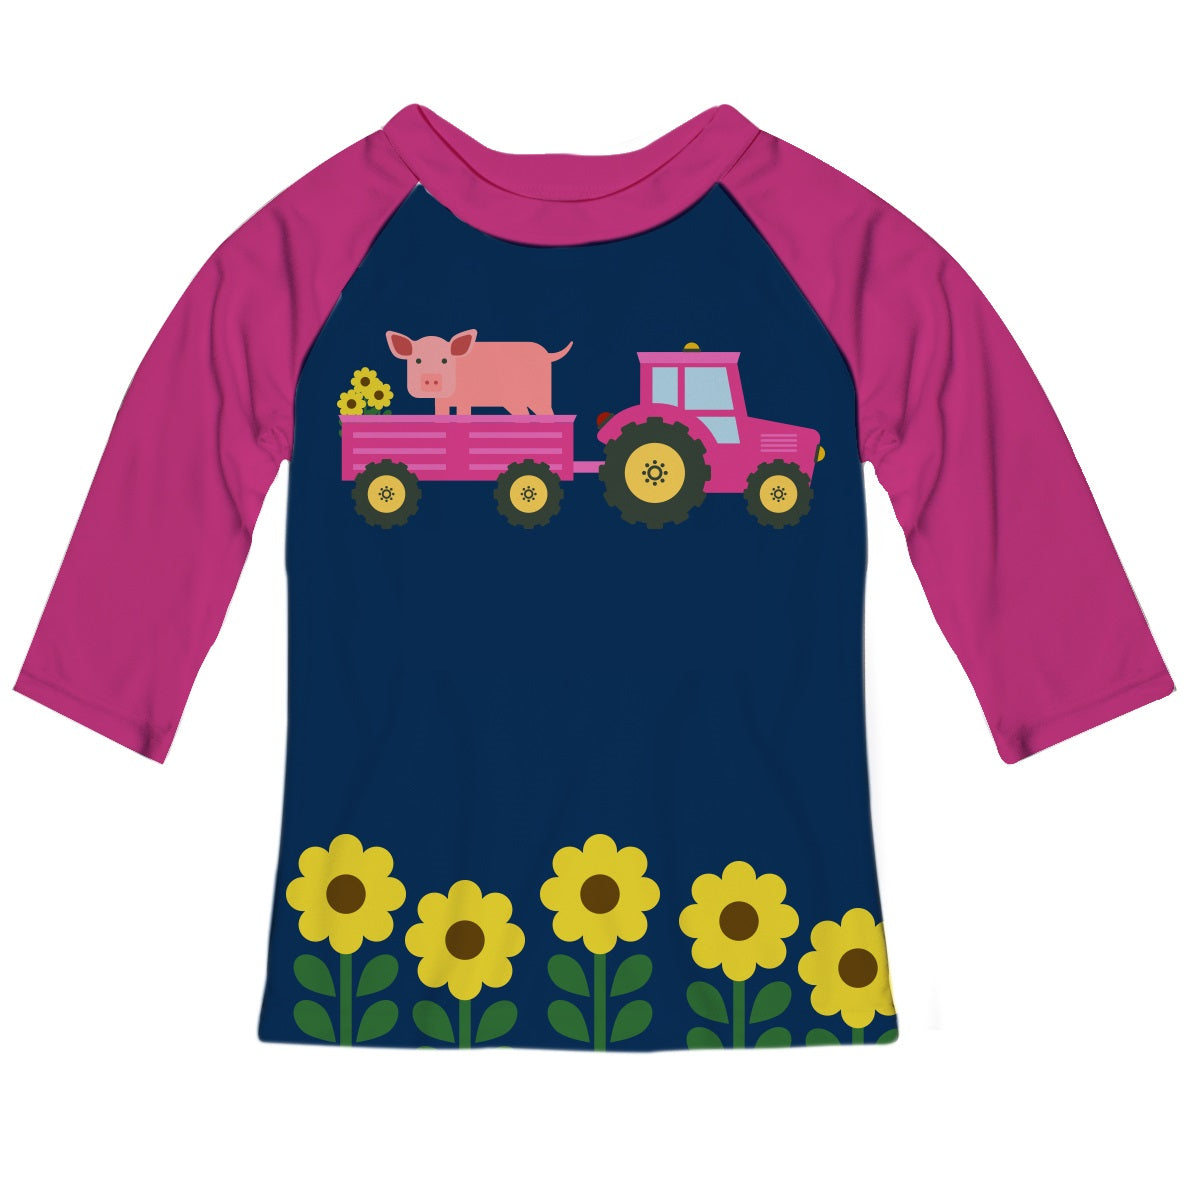 Tractor Name Navy and Pink Raglan Tee Shirt 3/4 Sleeve - Wimziy&Co.